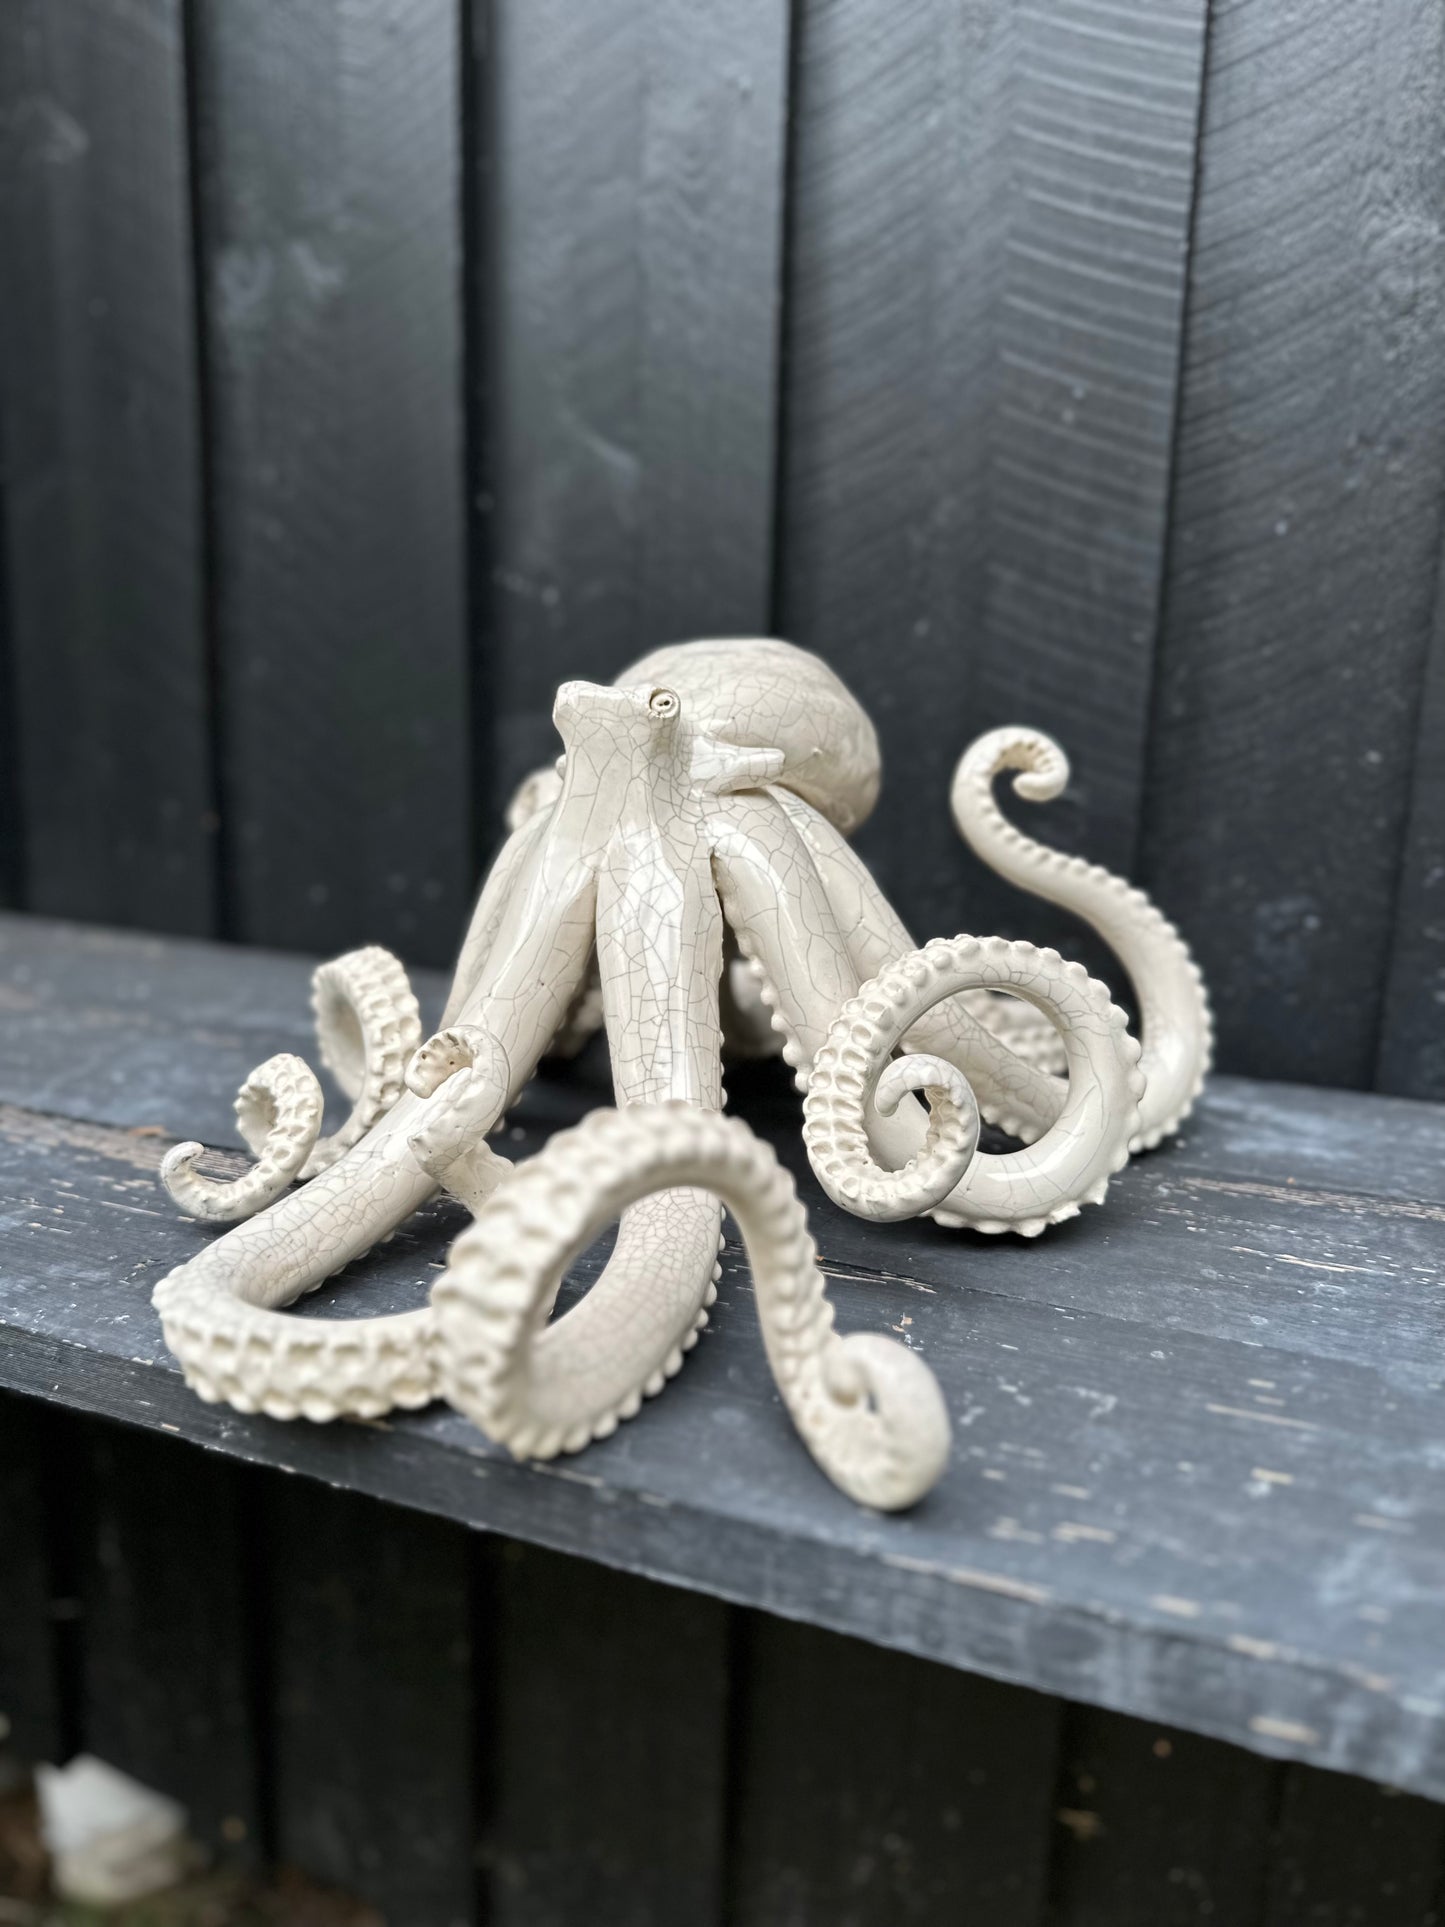 White crackled squid